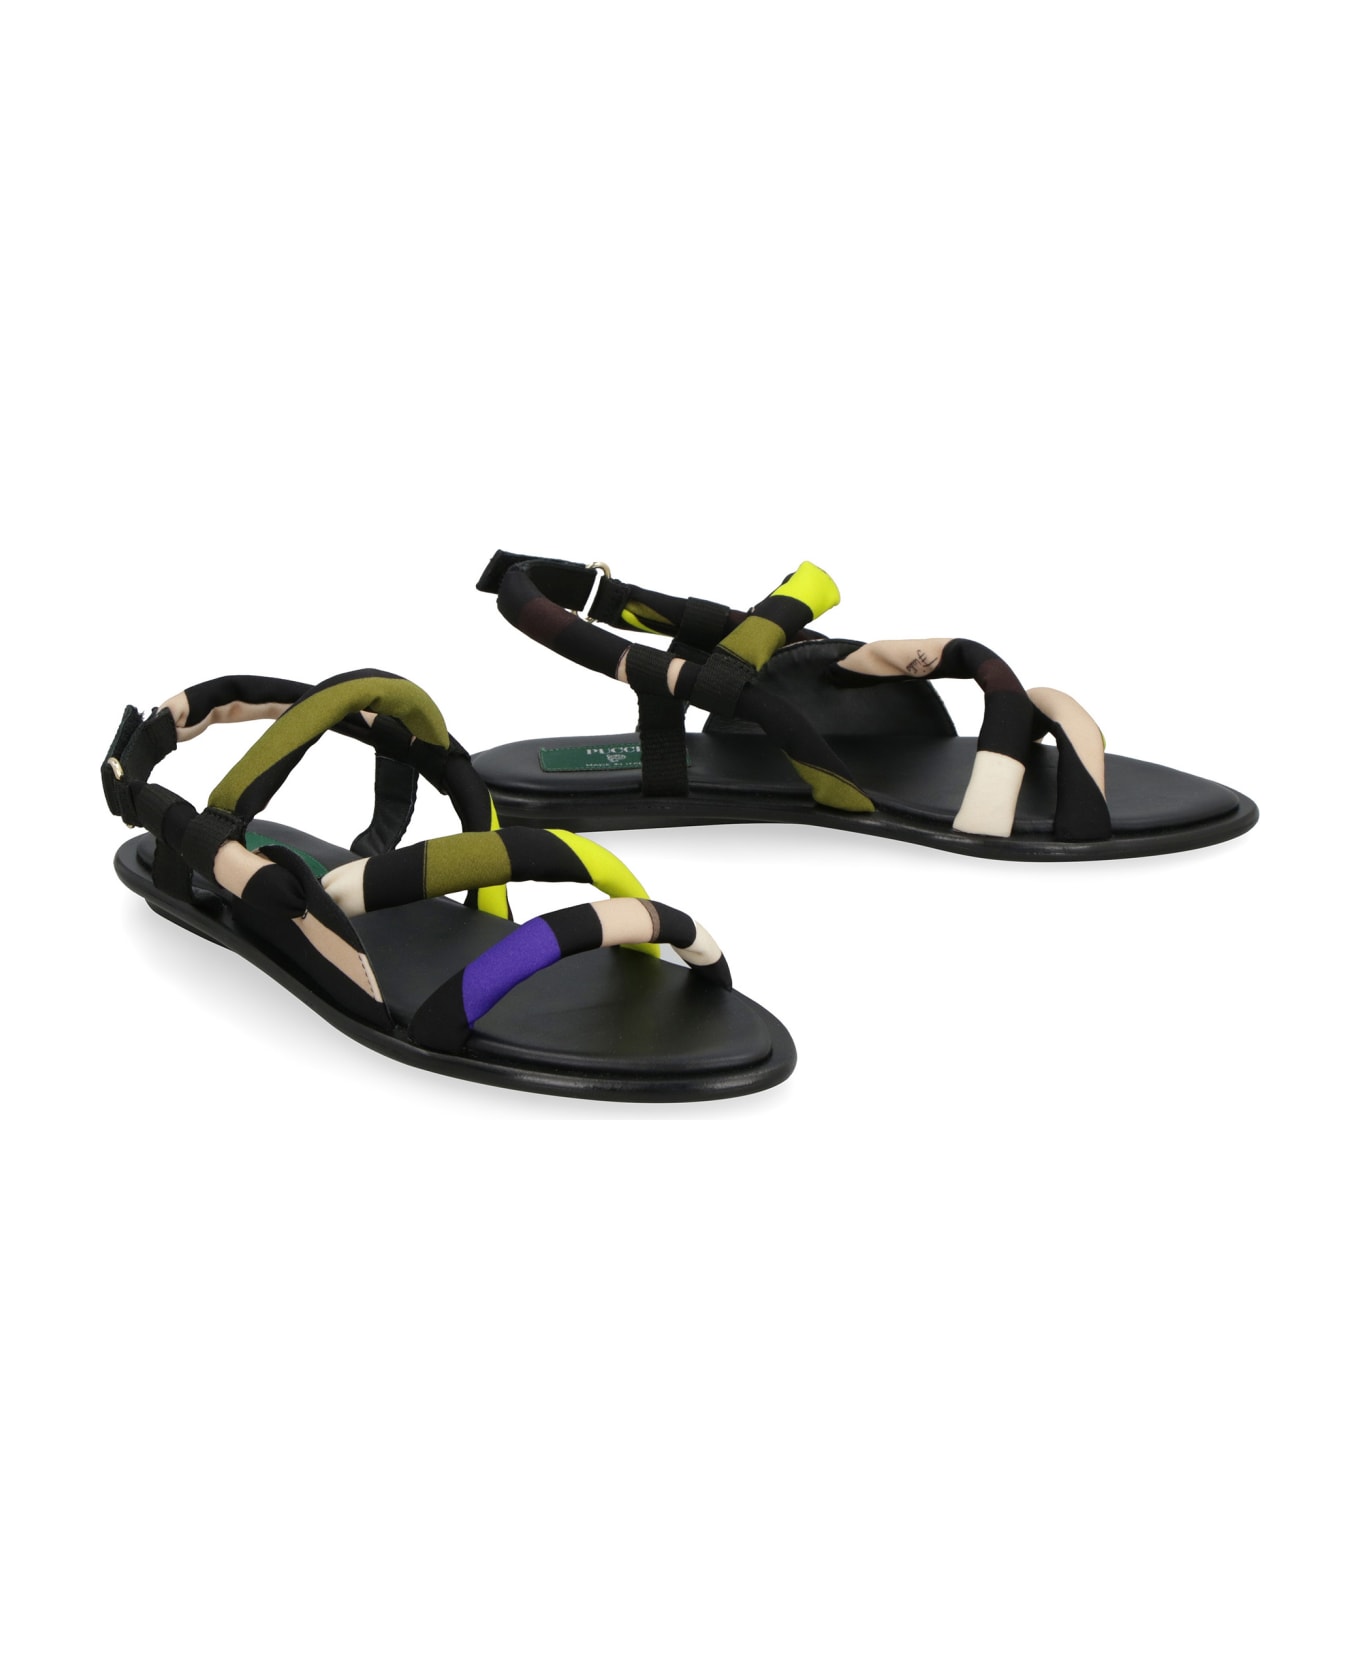 Pucci Lee Flat Sandals - Multicolor サンダル